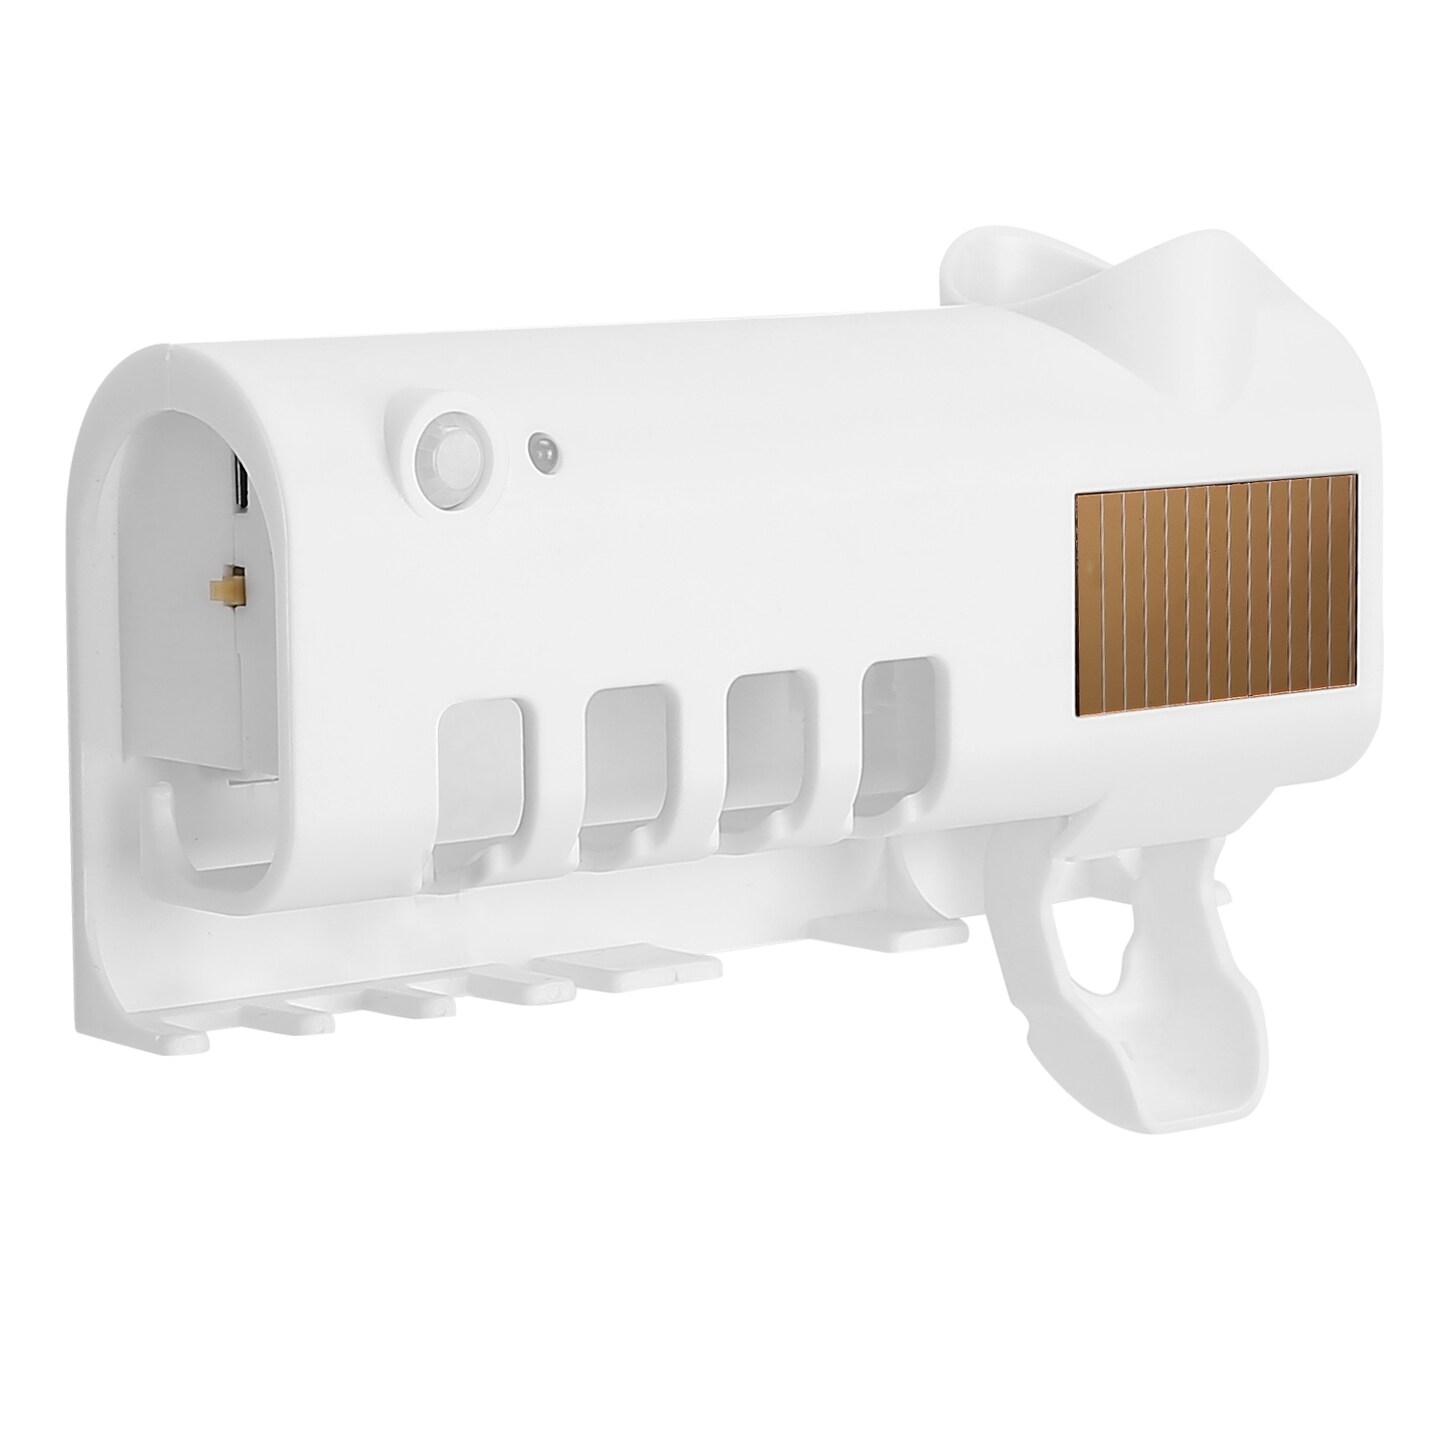 Global Phoenix Wall Mounted Toothbrush Sanitizer Holder IR Induction UV Sanitization Rack with 4 Slots